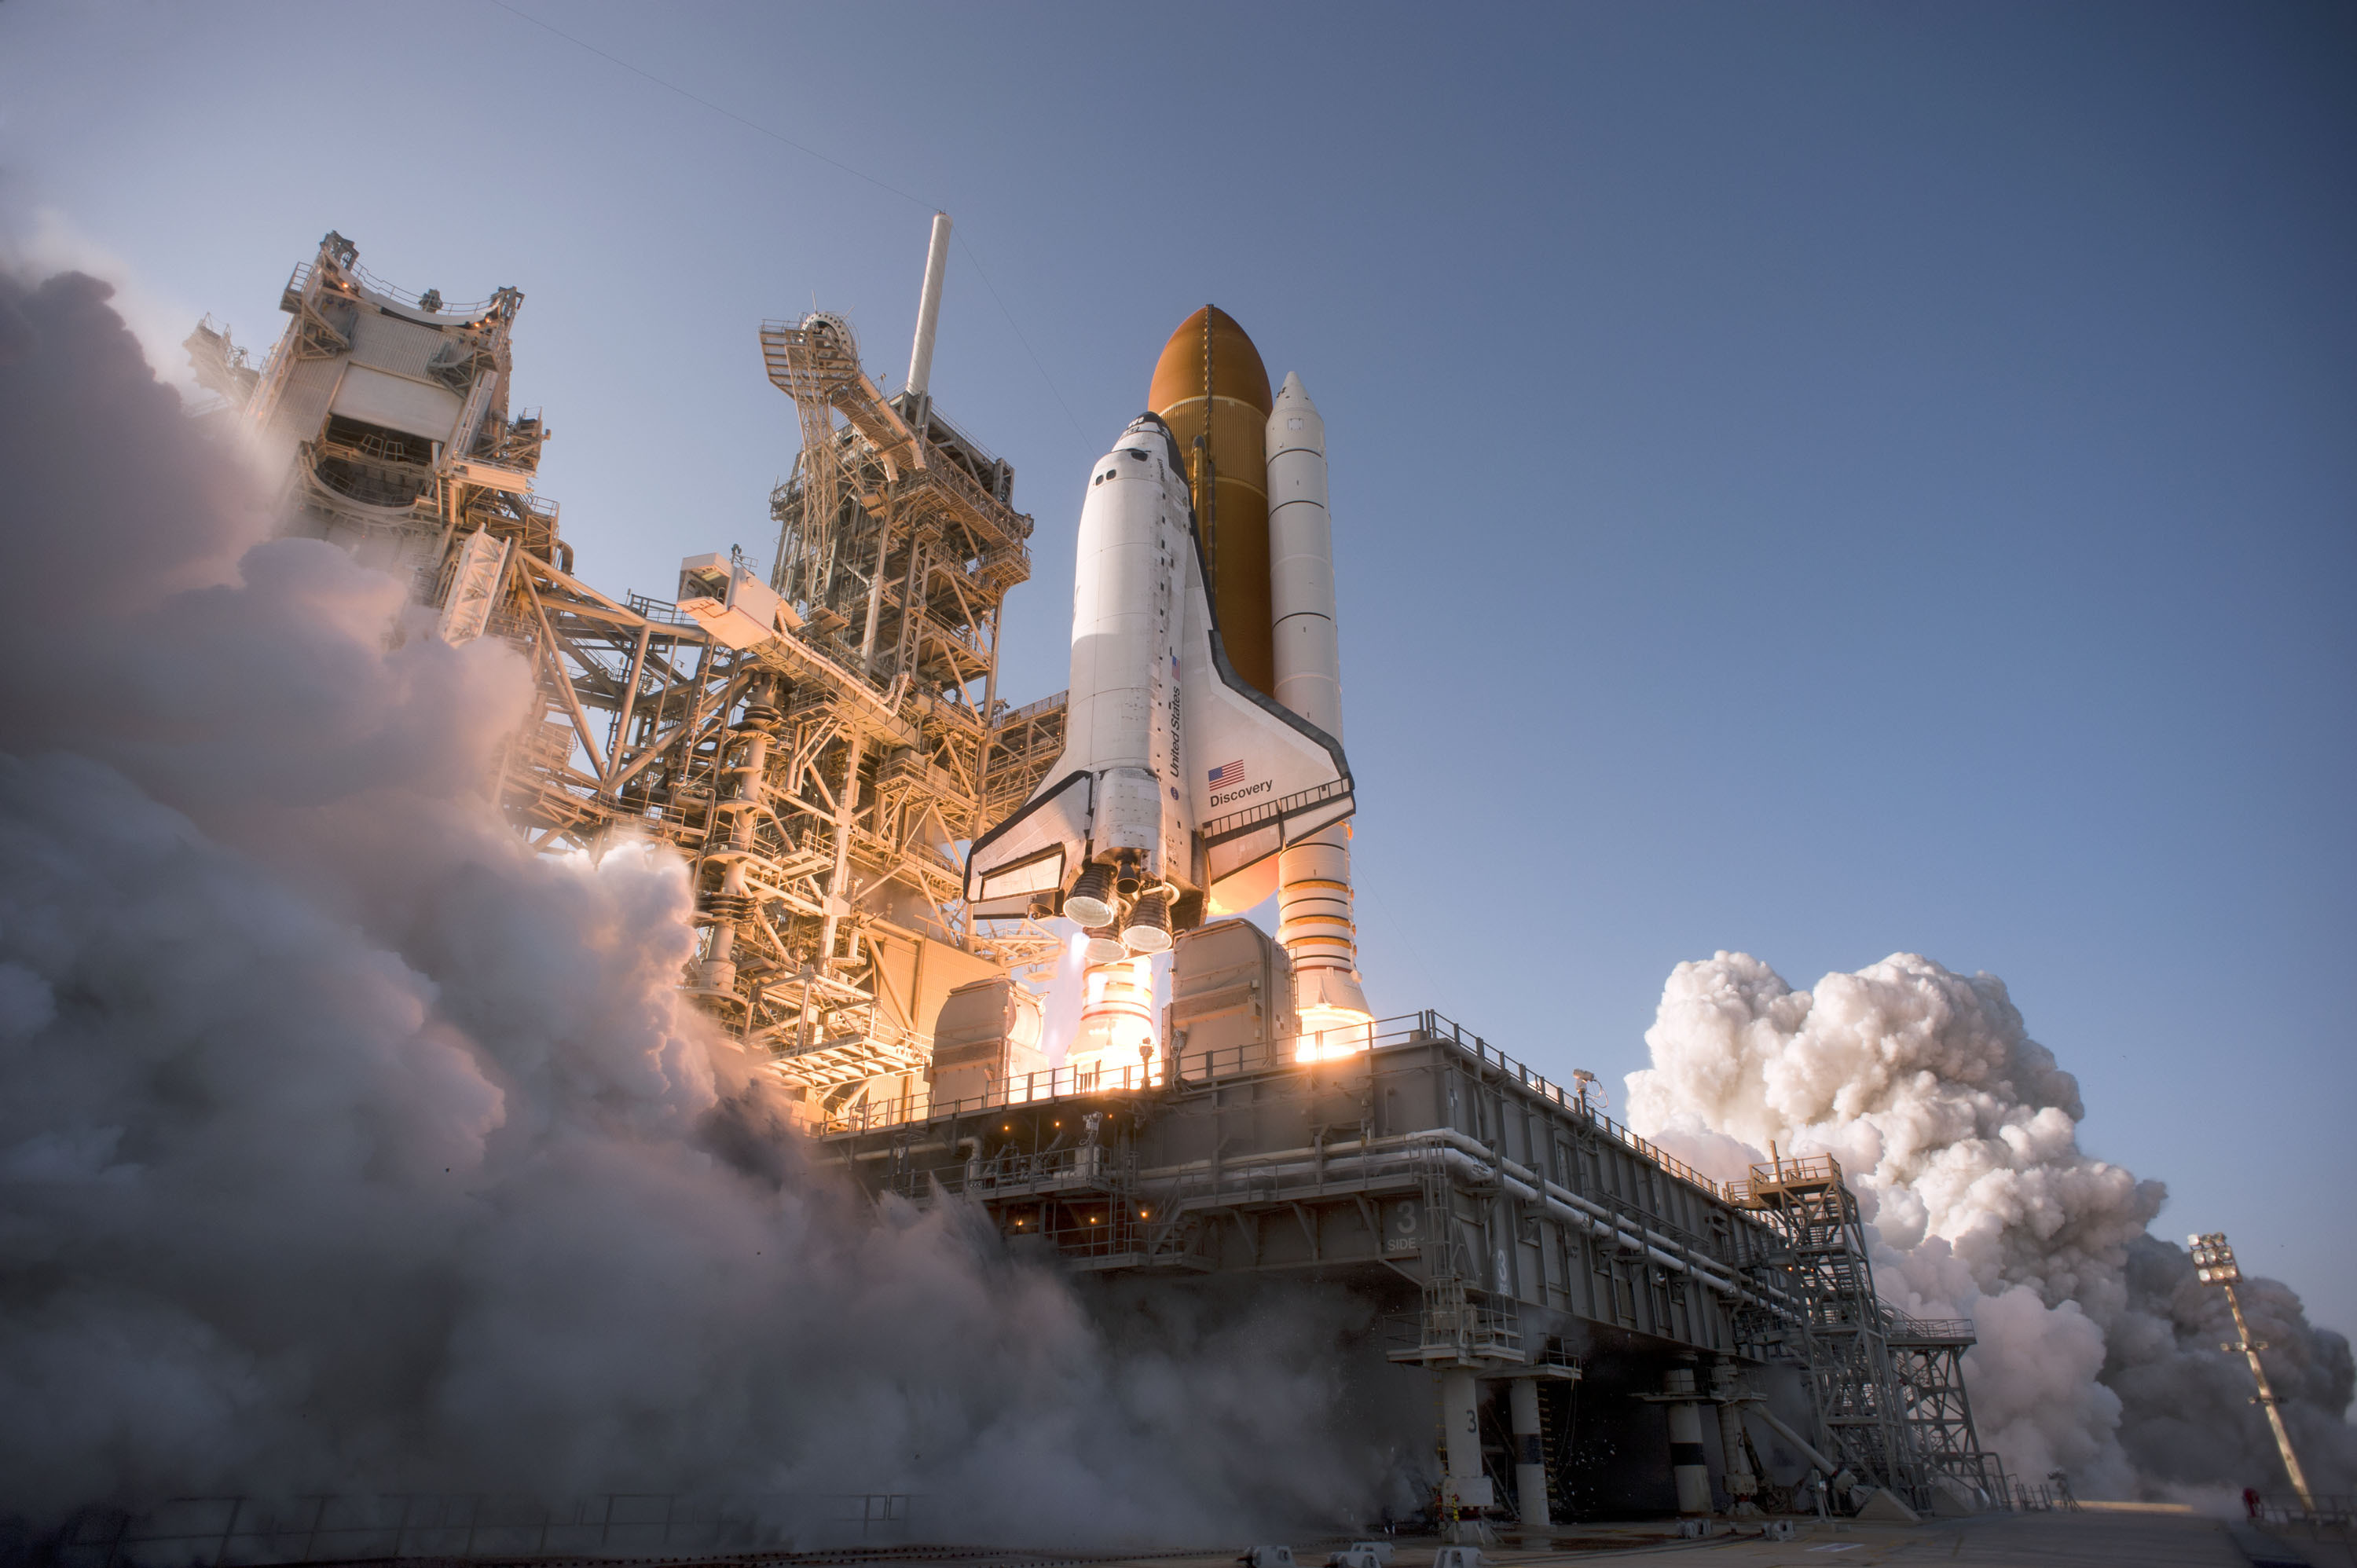 nasa space shuttle program cost